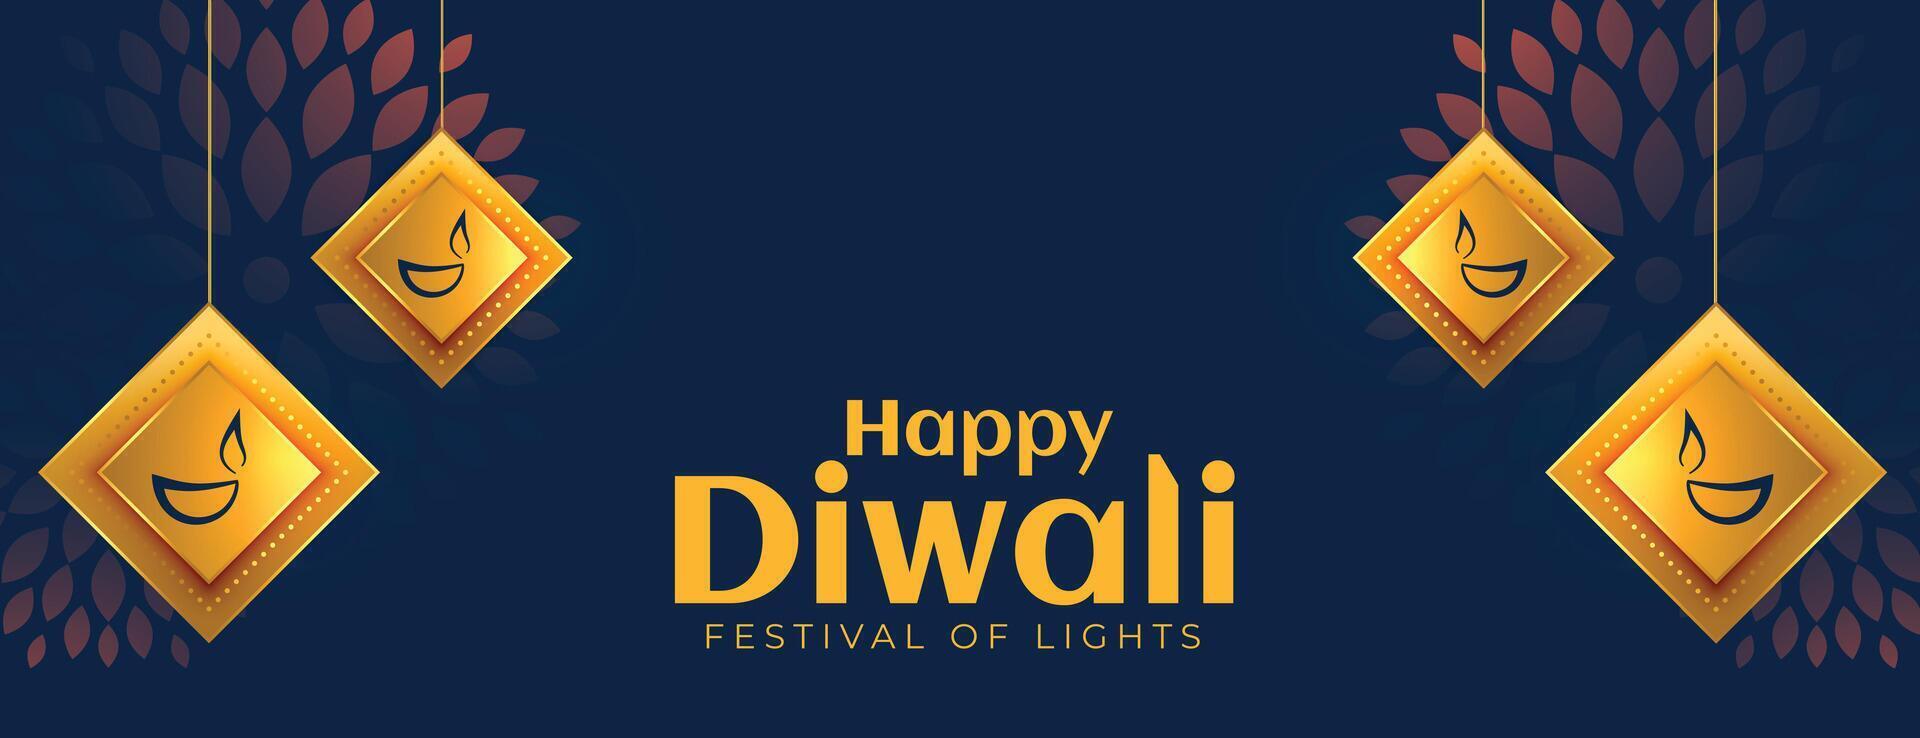 indisk kulturell Lycklig diwali festival hälsning baner vektor